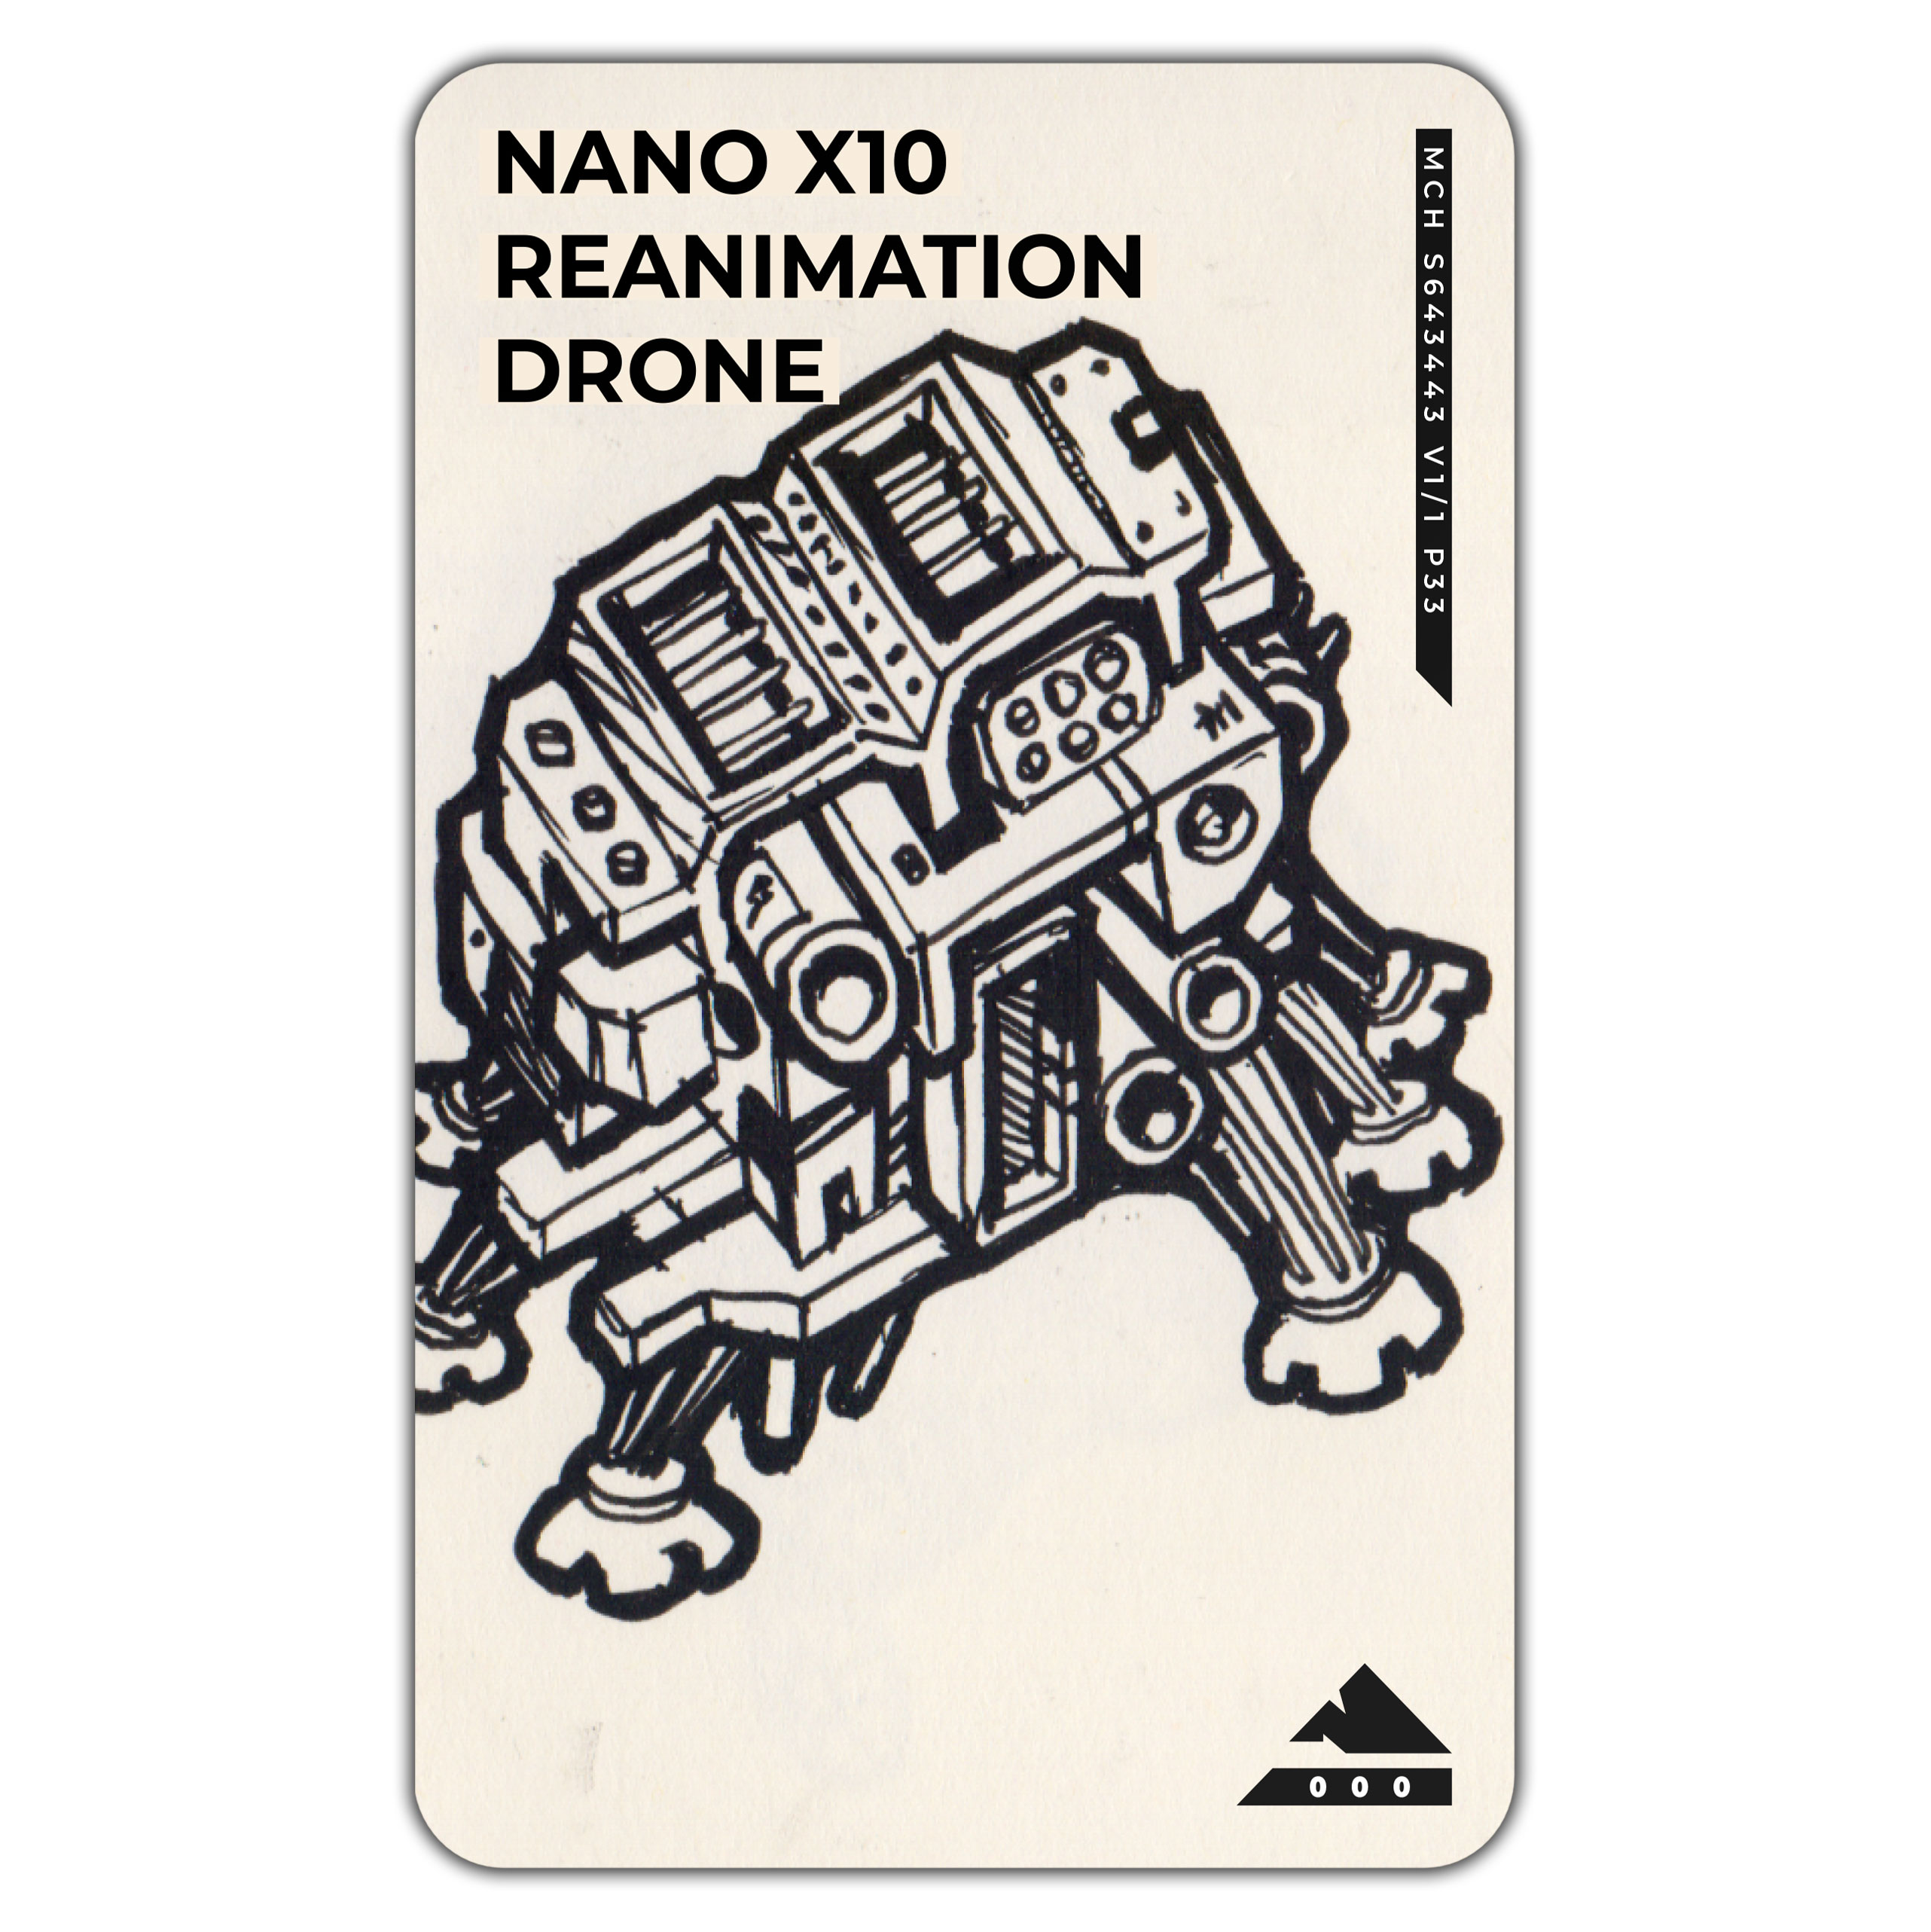 NANO X10 REANIMATION DRONE [ 0 0 0 ] ~ MCH S643443 V1/1 P33